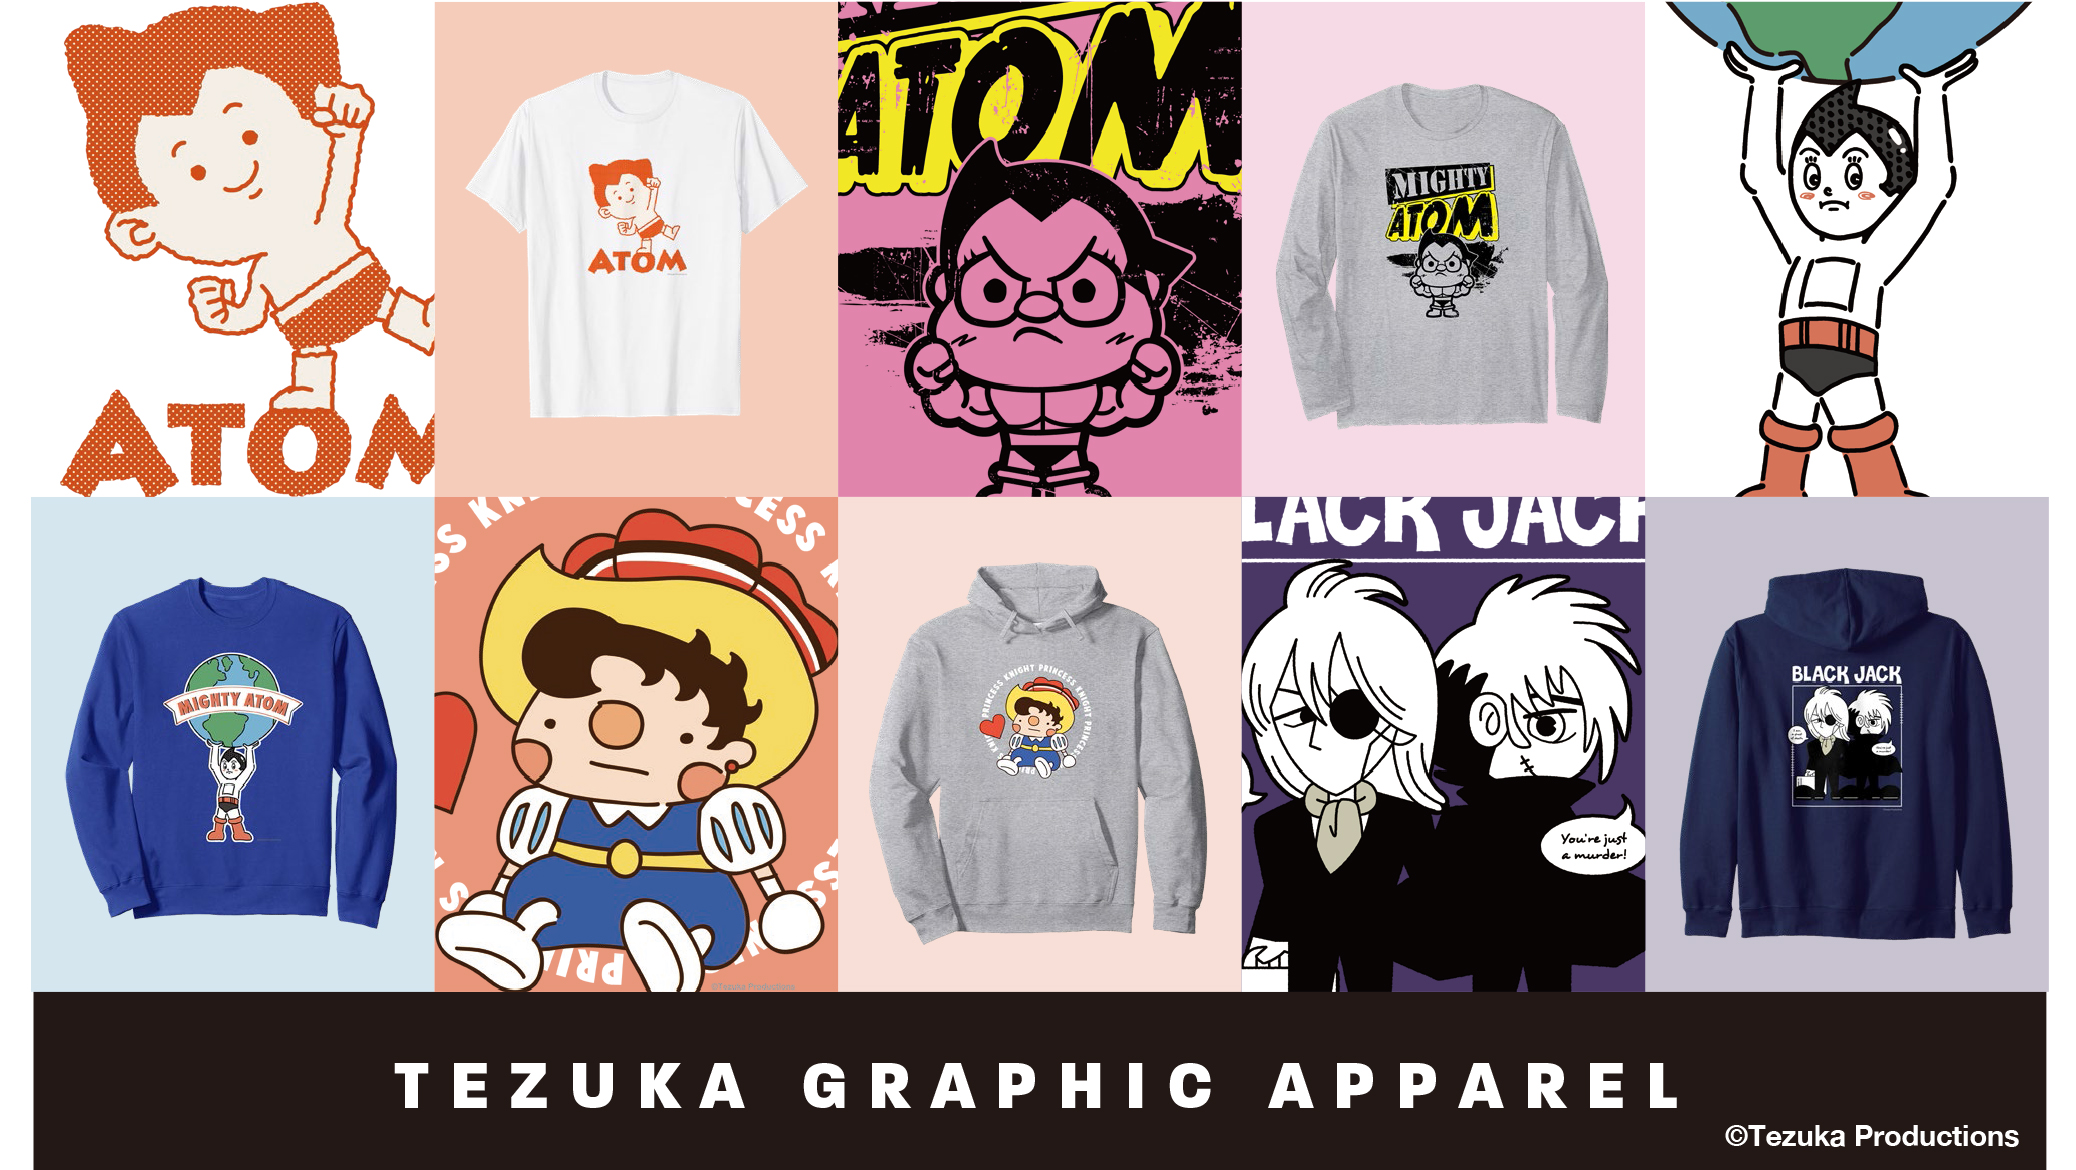 Tezuka Productions [Astro Boy] T-shirt Mecha 2003 / L White 